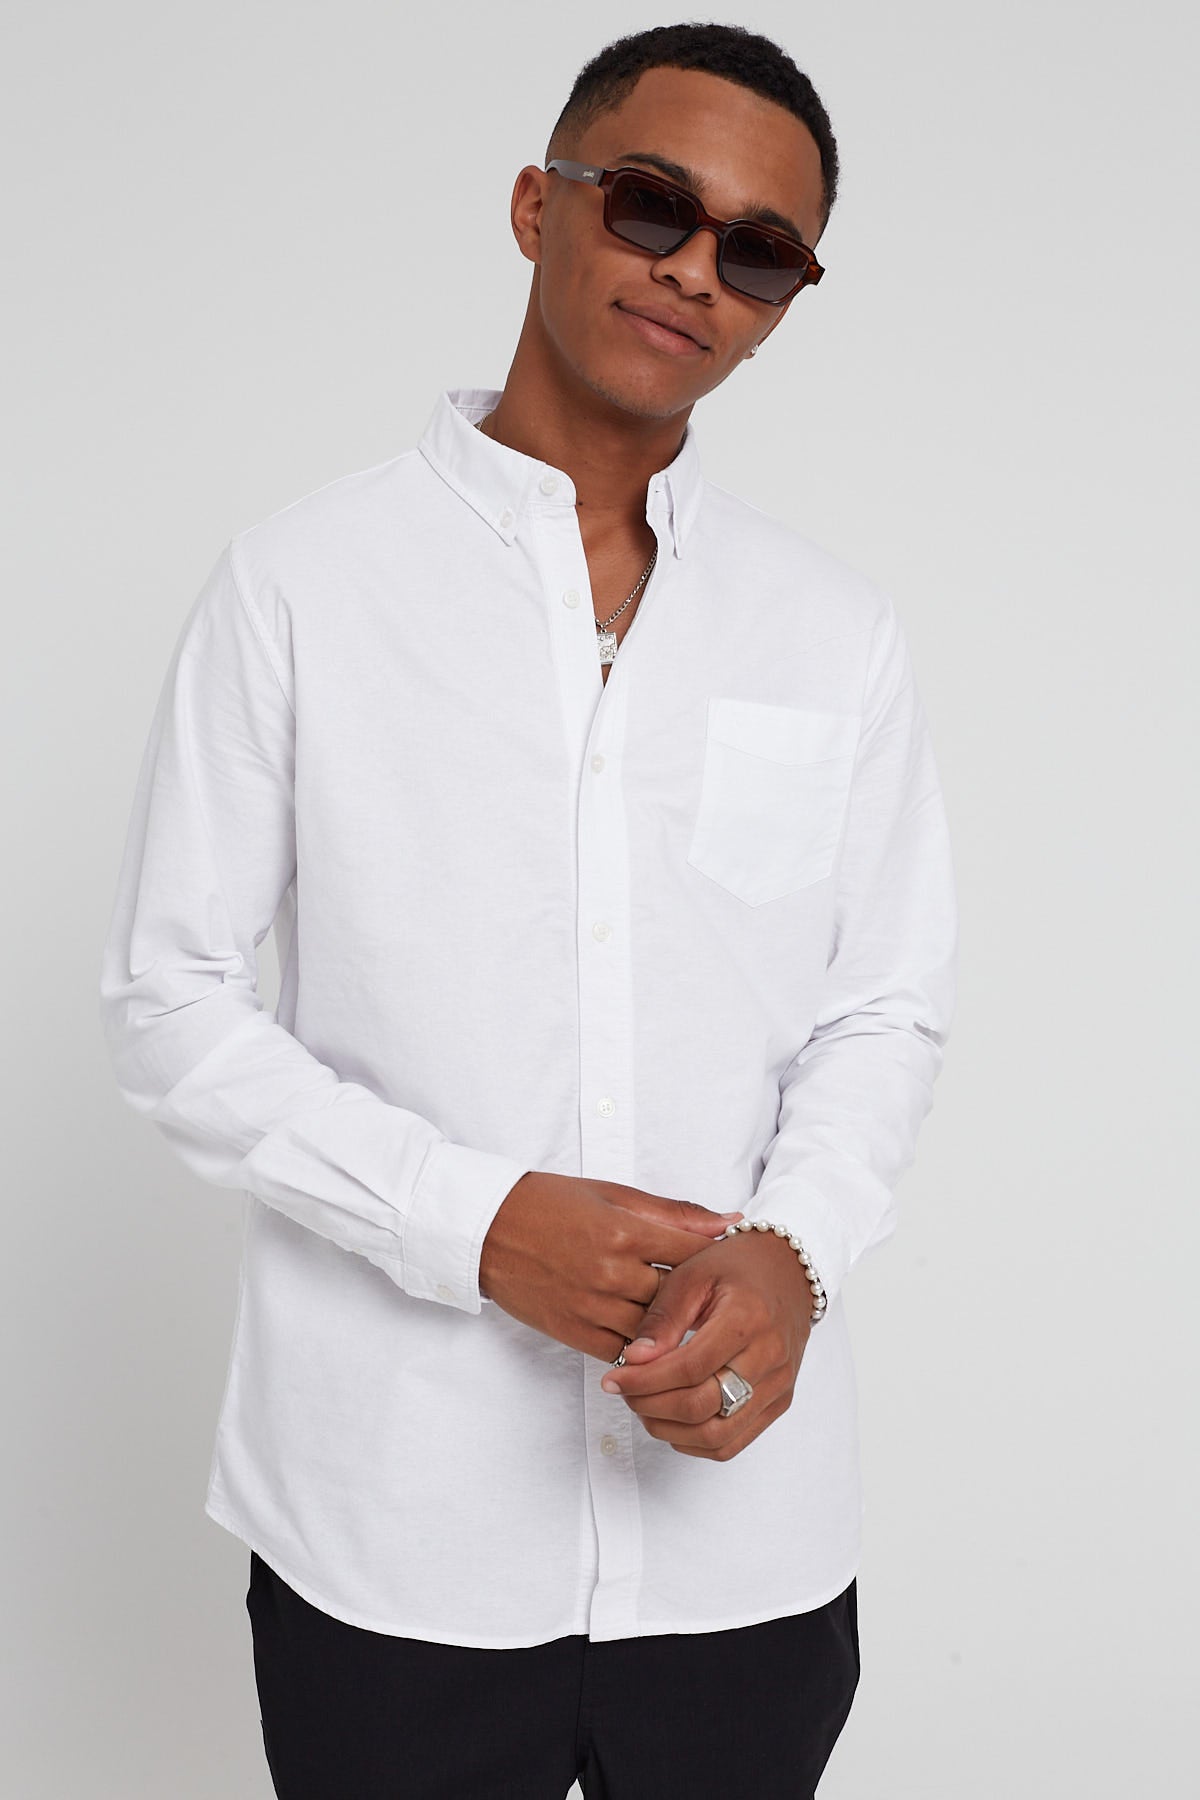 As Colour Ofxord Long Sleeve Shirt White